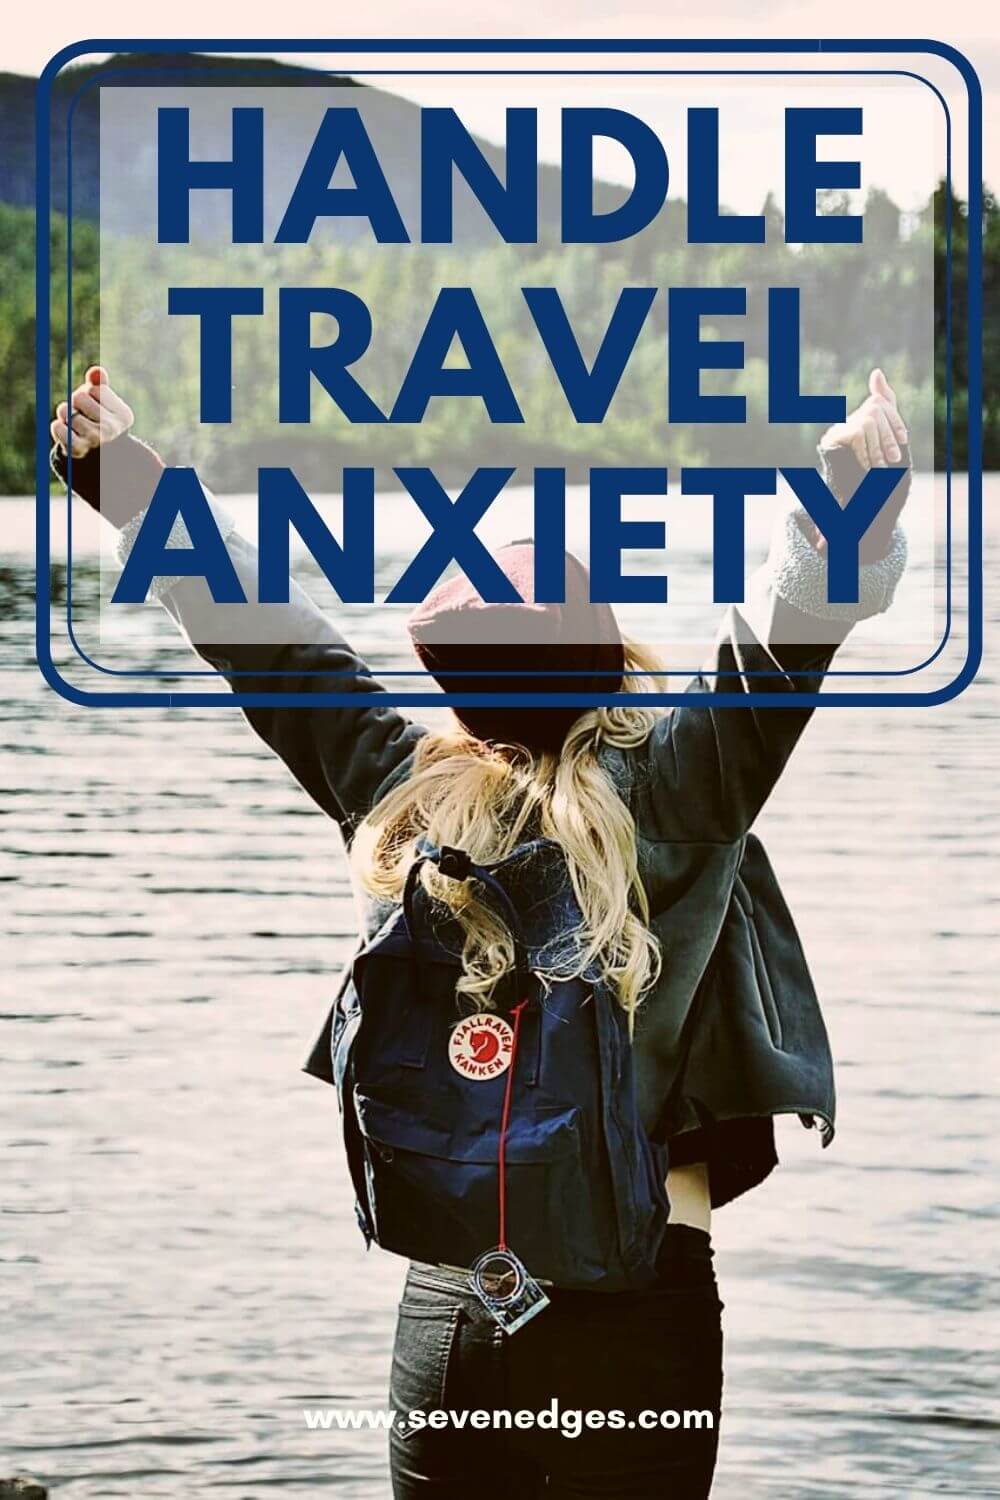 Handling Travel Anxiety